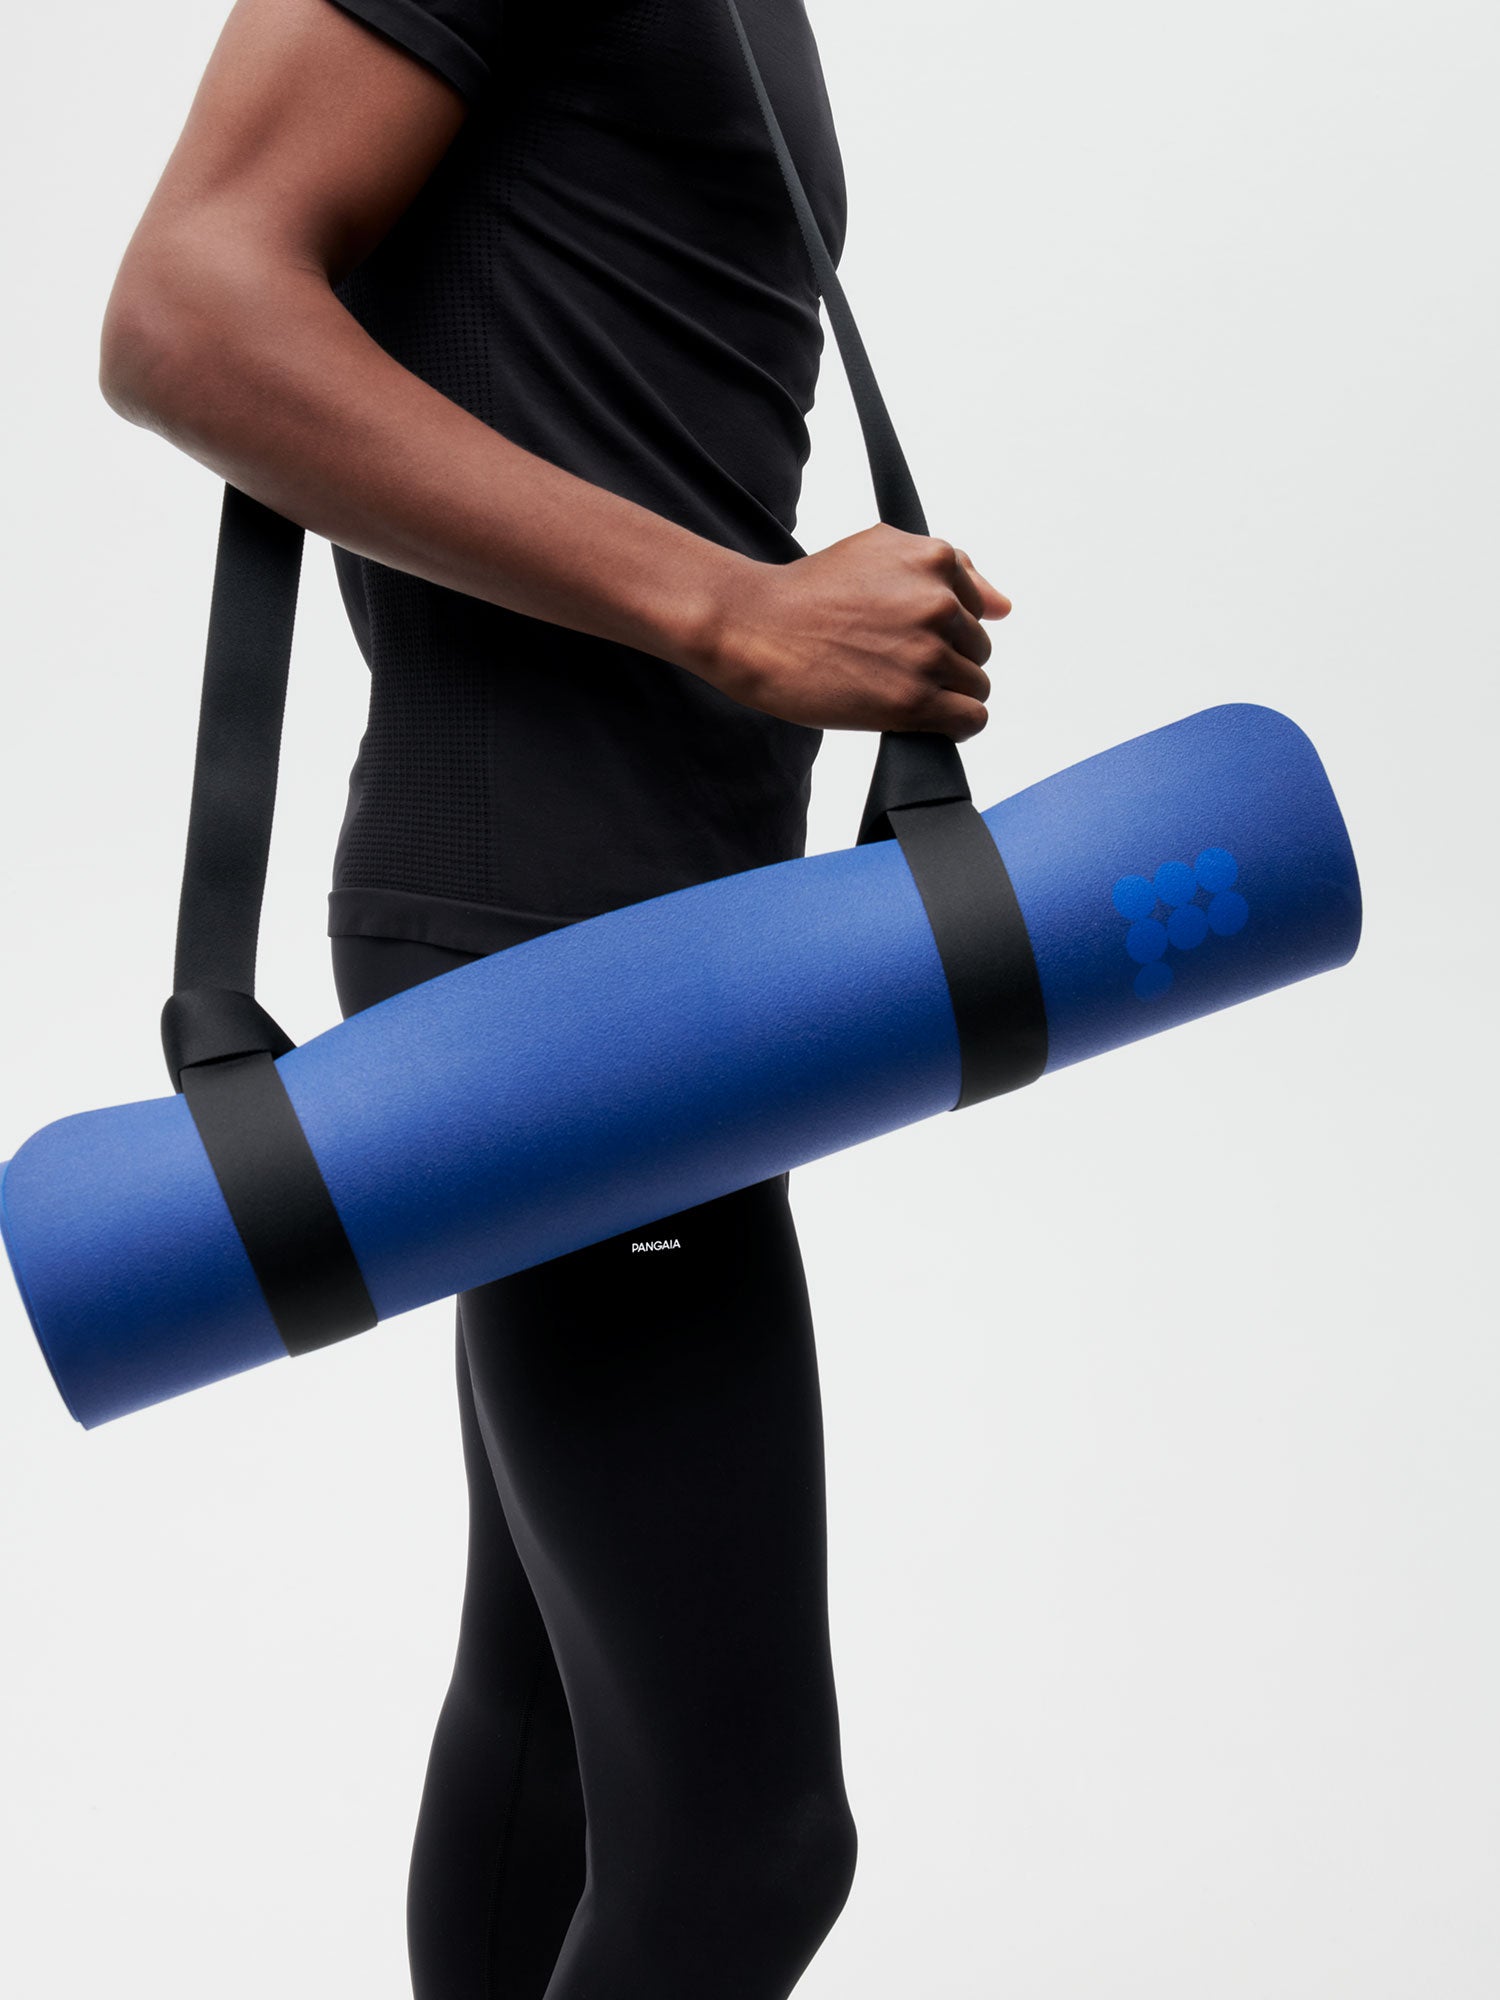 Activewear Yoga Mat Oxford Blue Male